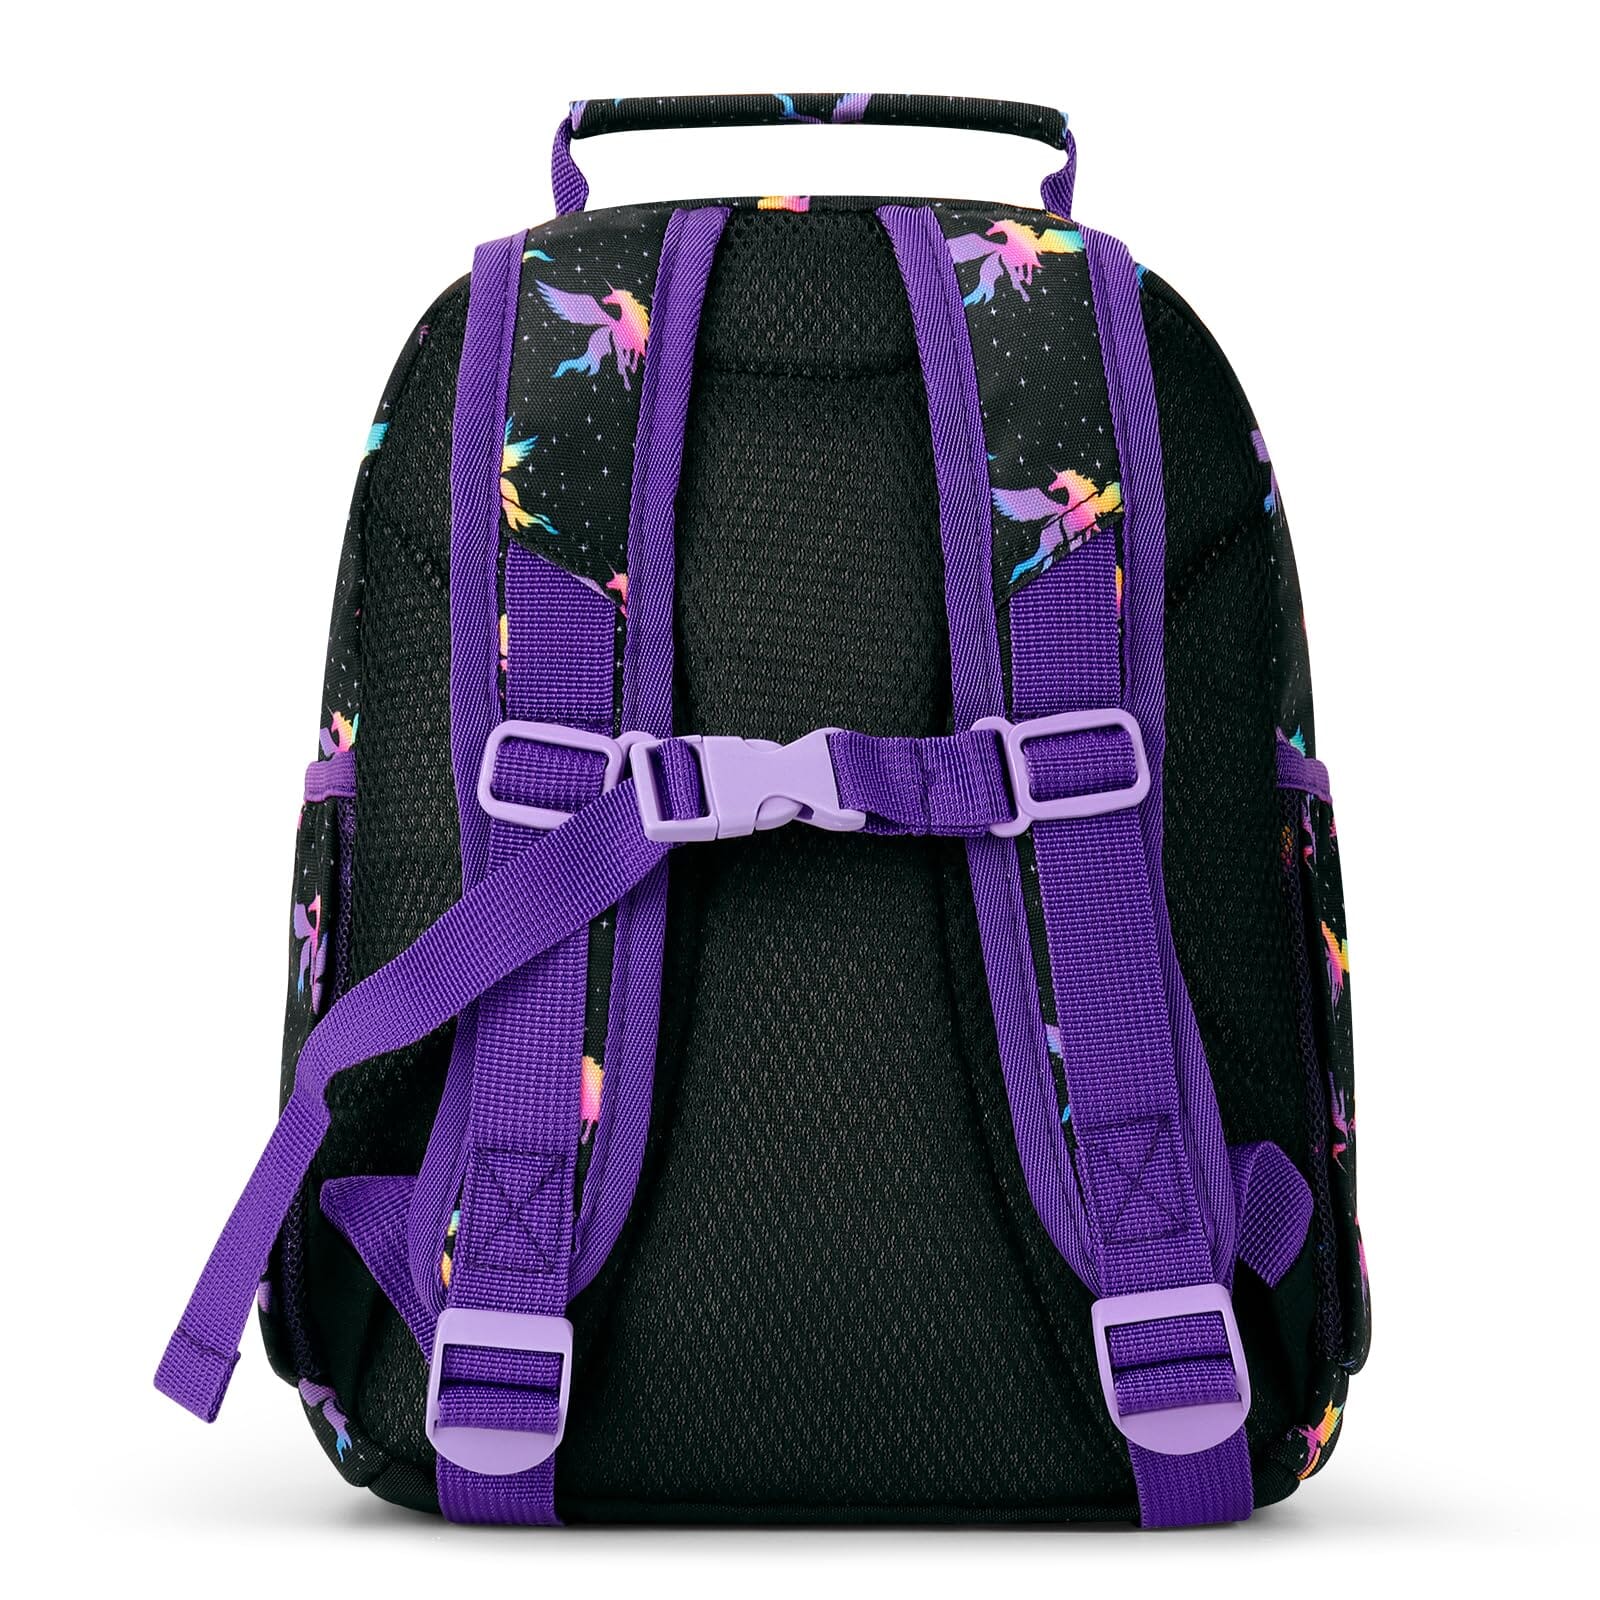 Choco Mocha Unicorn Toddler Backpack for Girls, Kids Preschool Backpack for Toddler Kindergarten Backpack 12 Inch, Glitter Black chocomochakids 